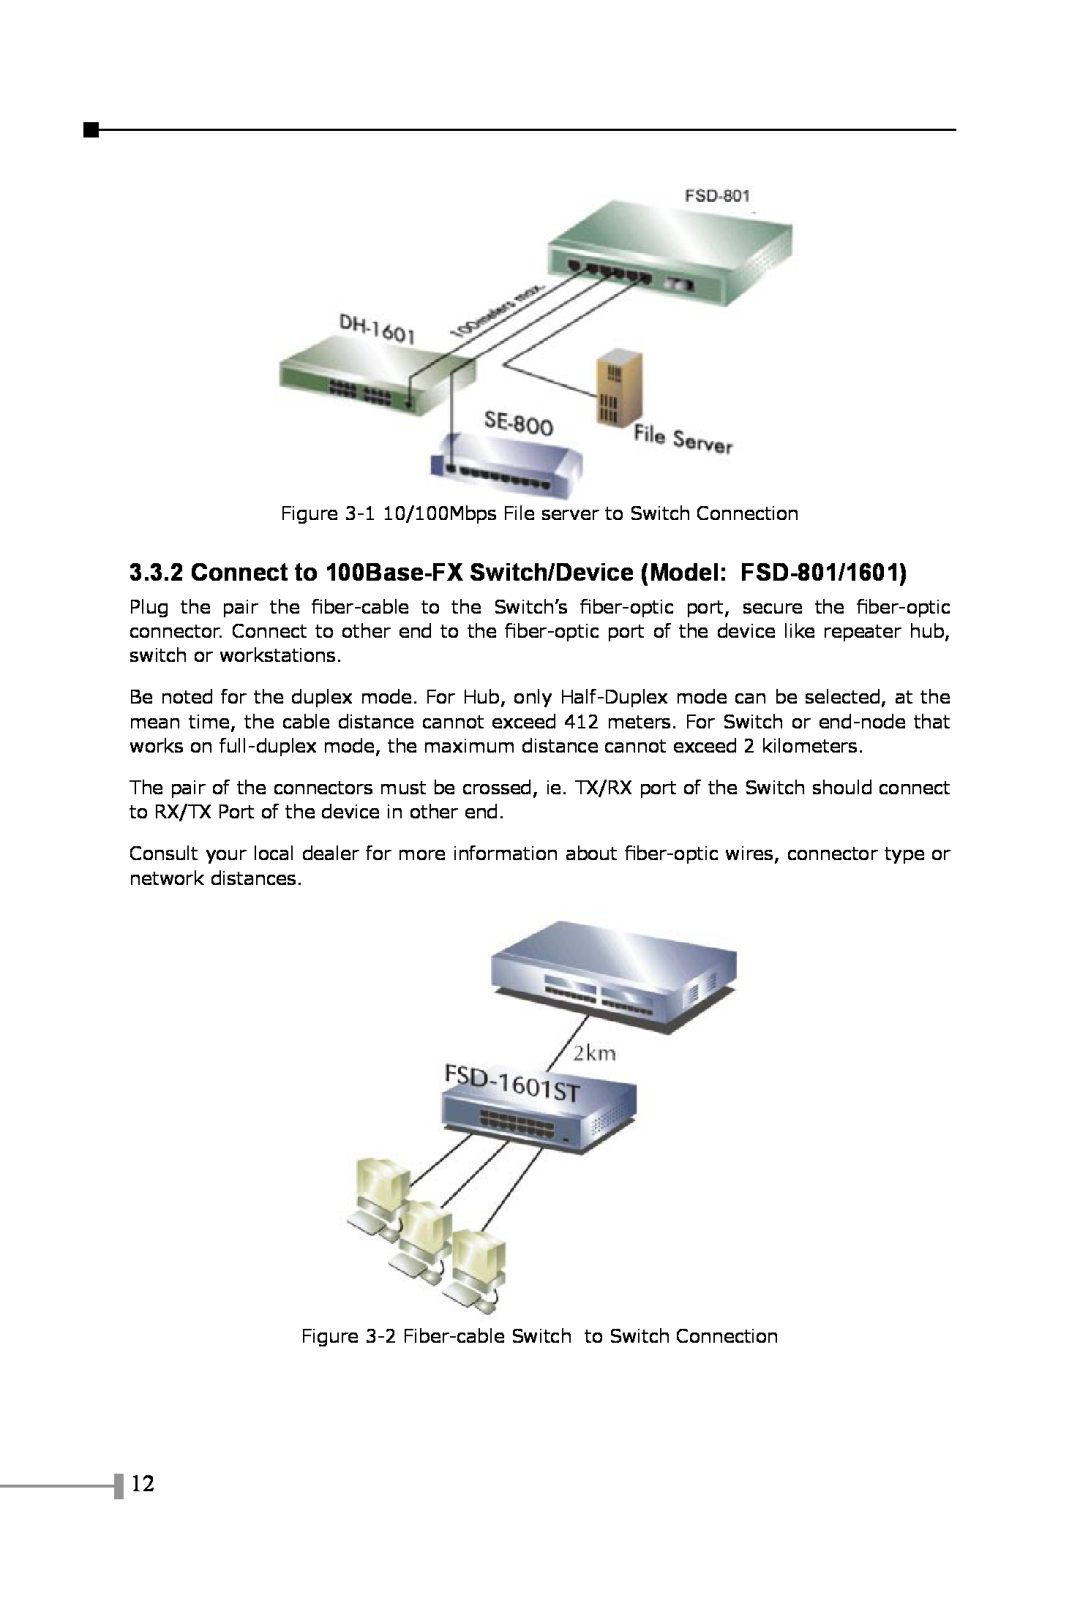 Planet Technology FSD-1601 ST, FSD-1600, FSD-1601SC manual Connect to 100Base-FX Switch/Device Model FSD-801/1601 